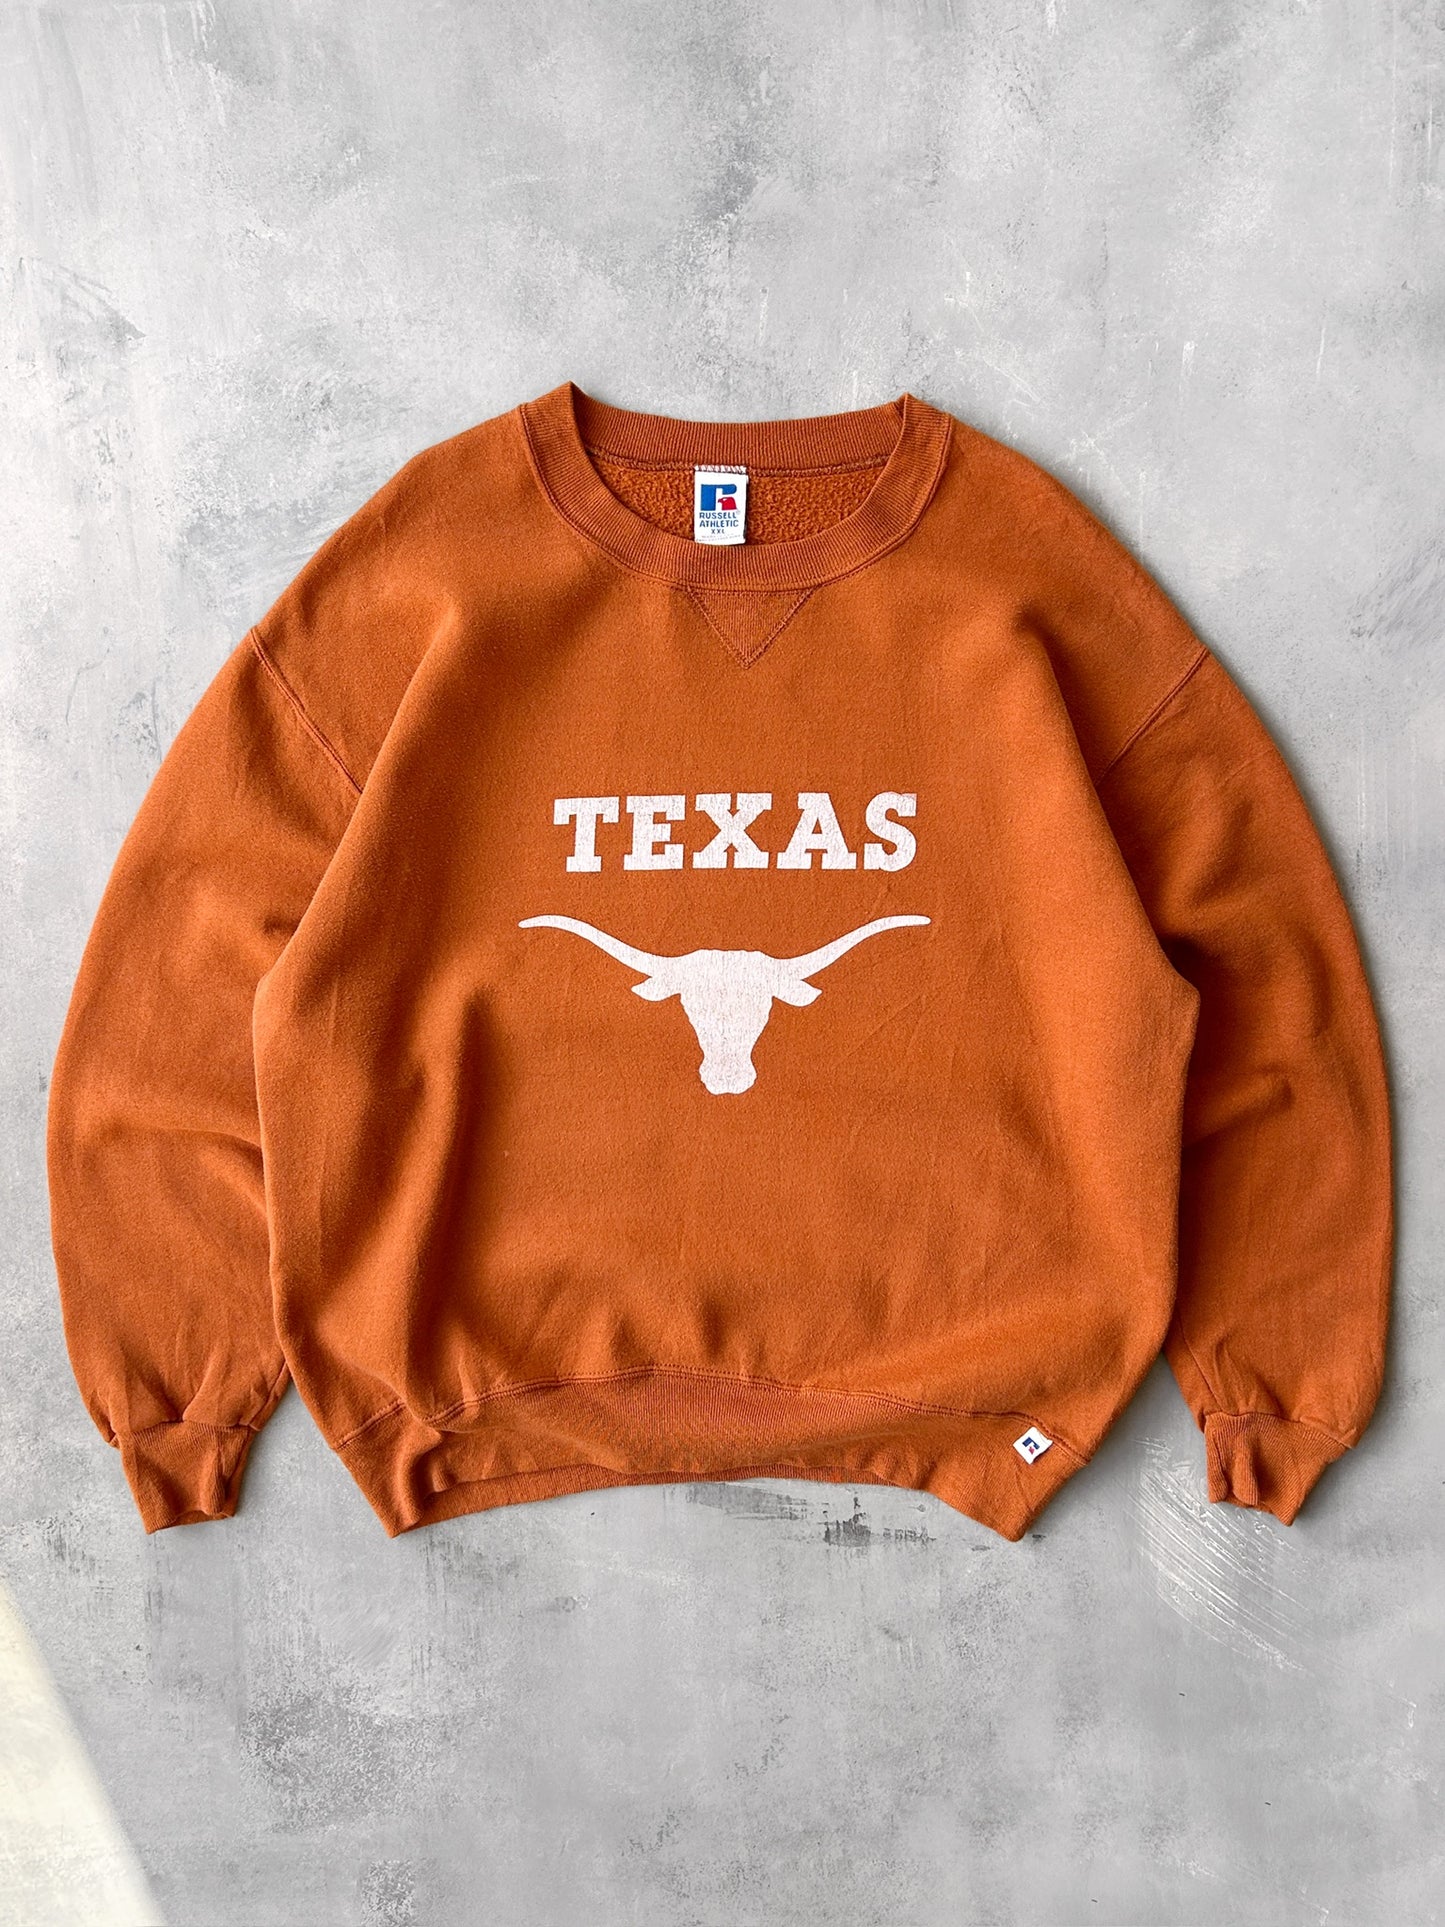 University of Texas Sweatshirt 90's - XL